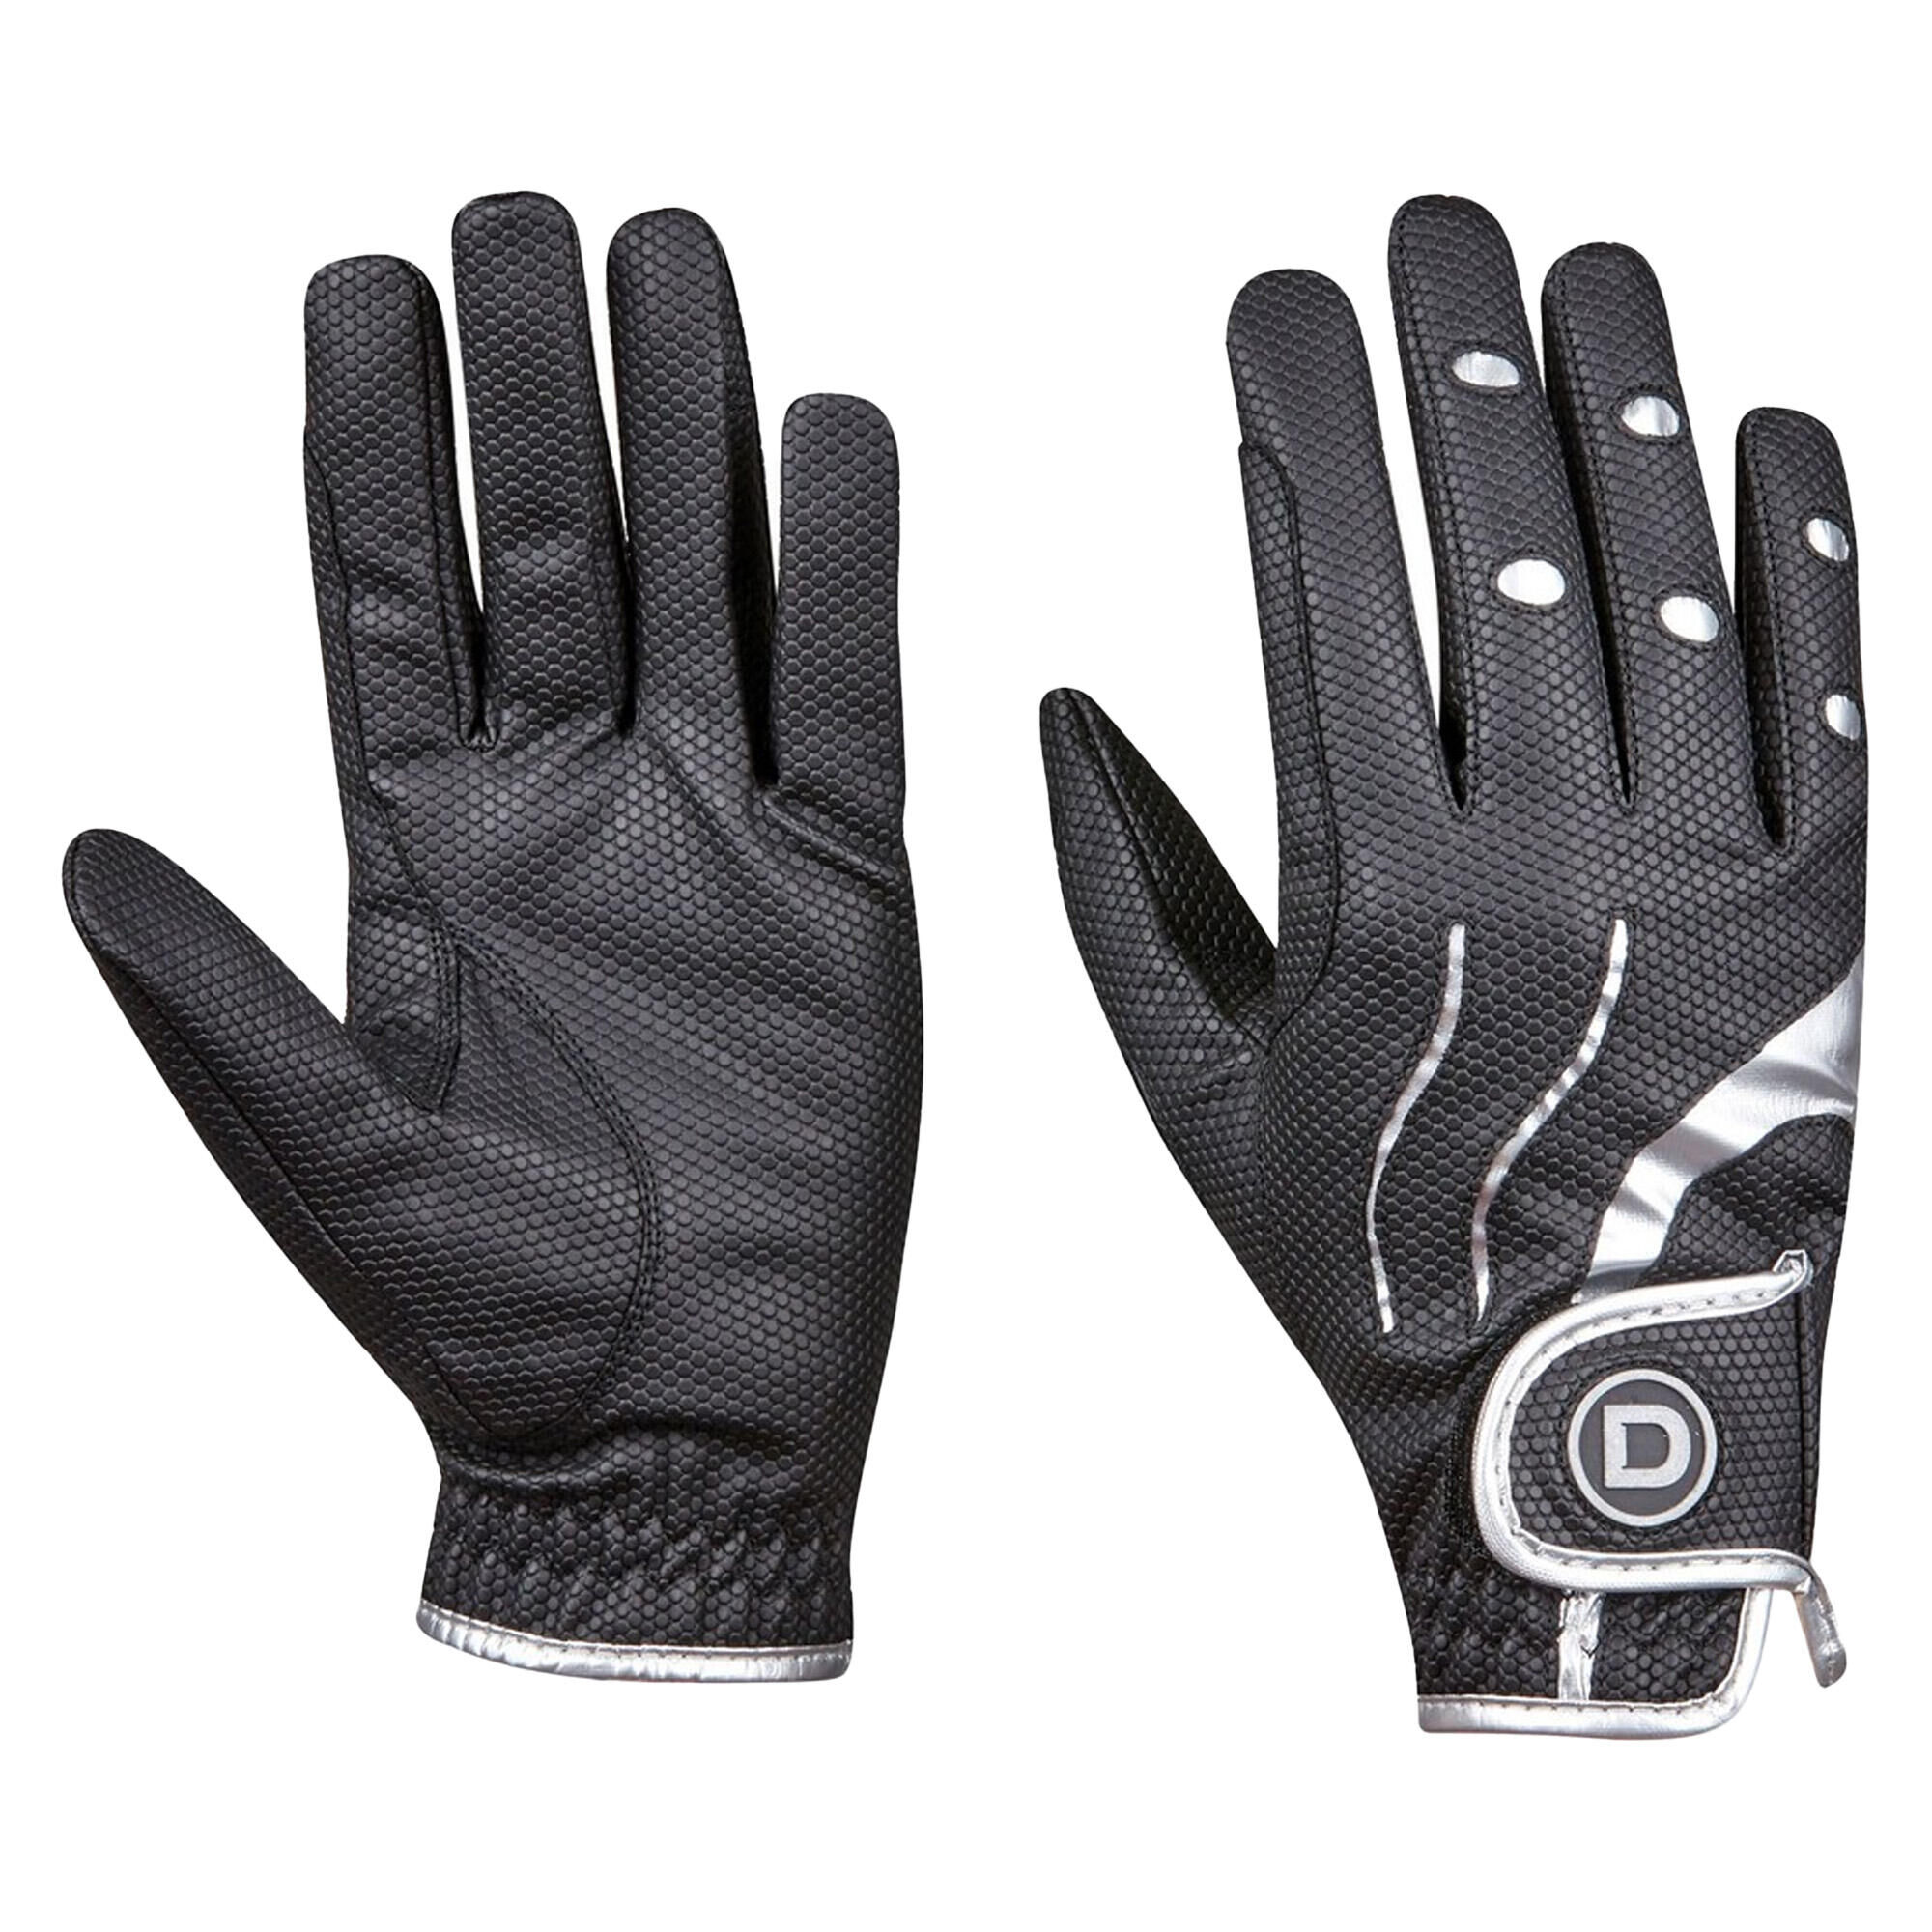 DUBLIN Pro Everyday Riding Gloves (Black/Silver)